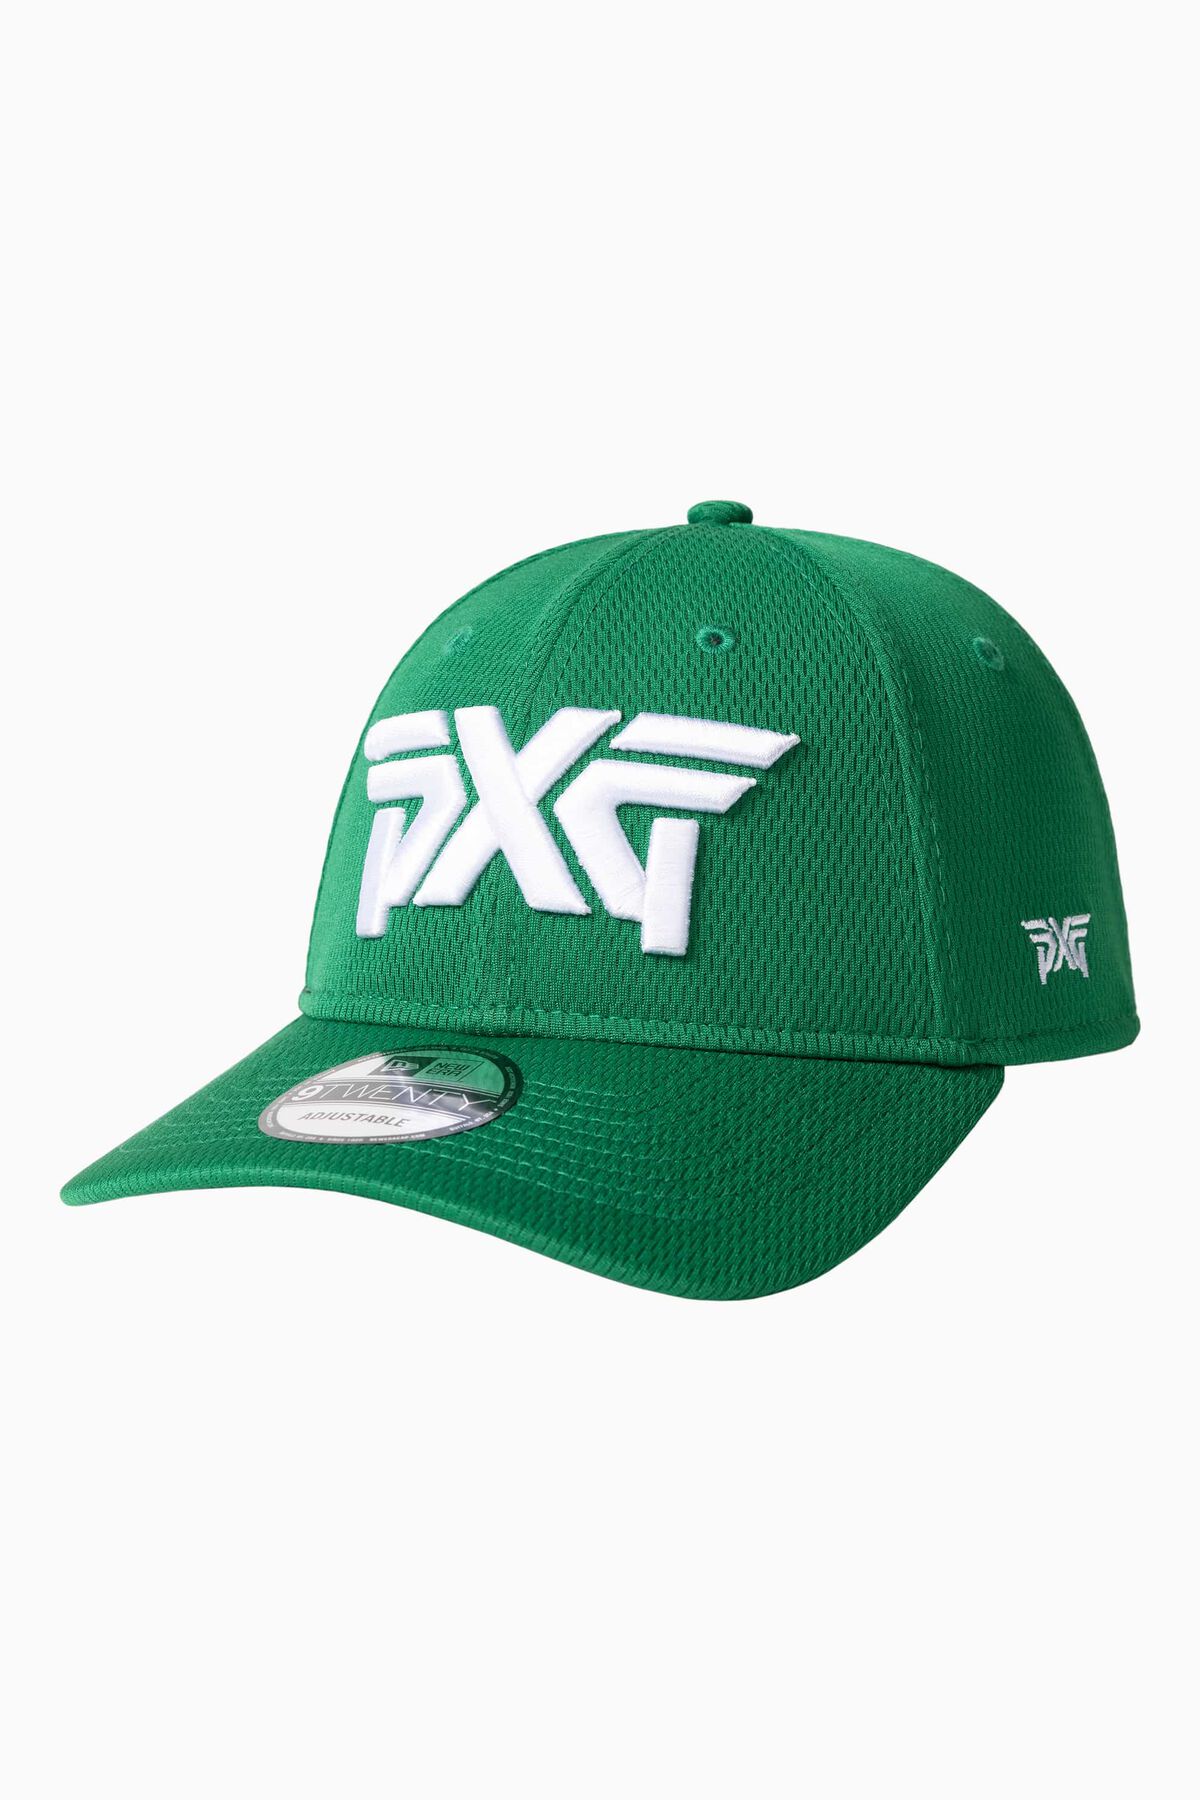 PXG Boston – Vert – Casquette ajustable 9TWENTY 